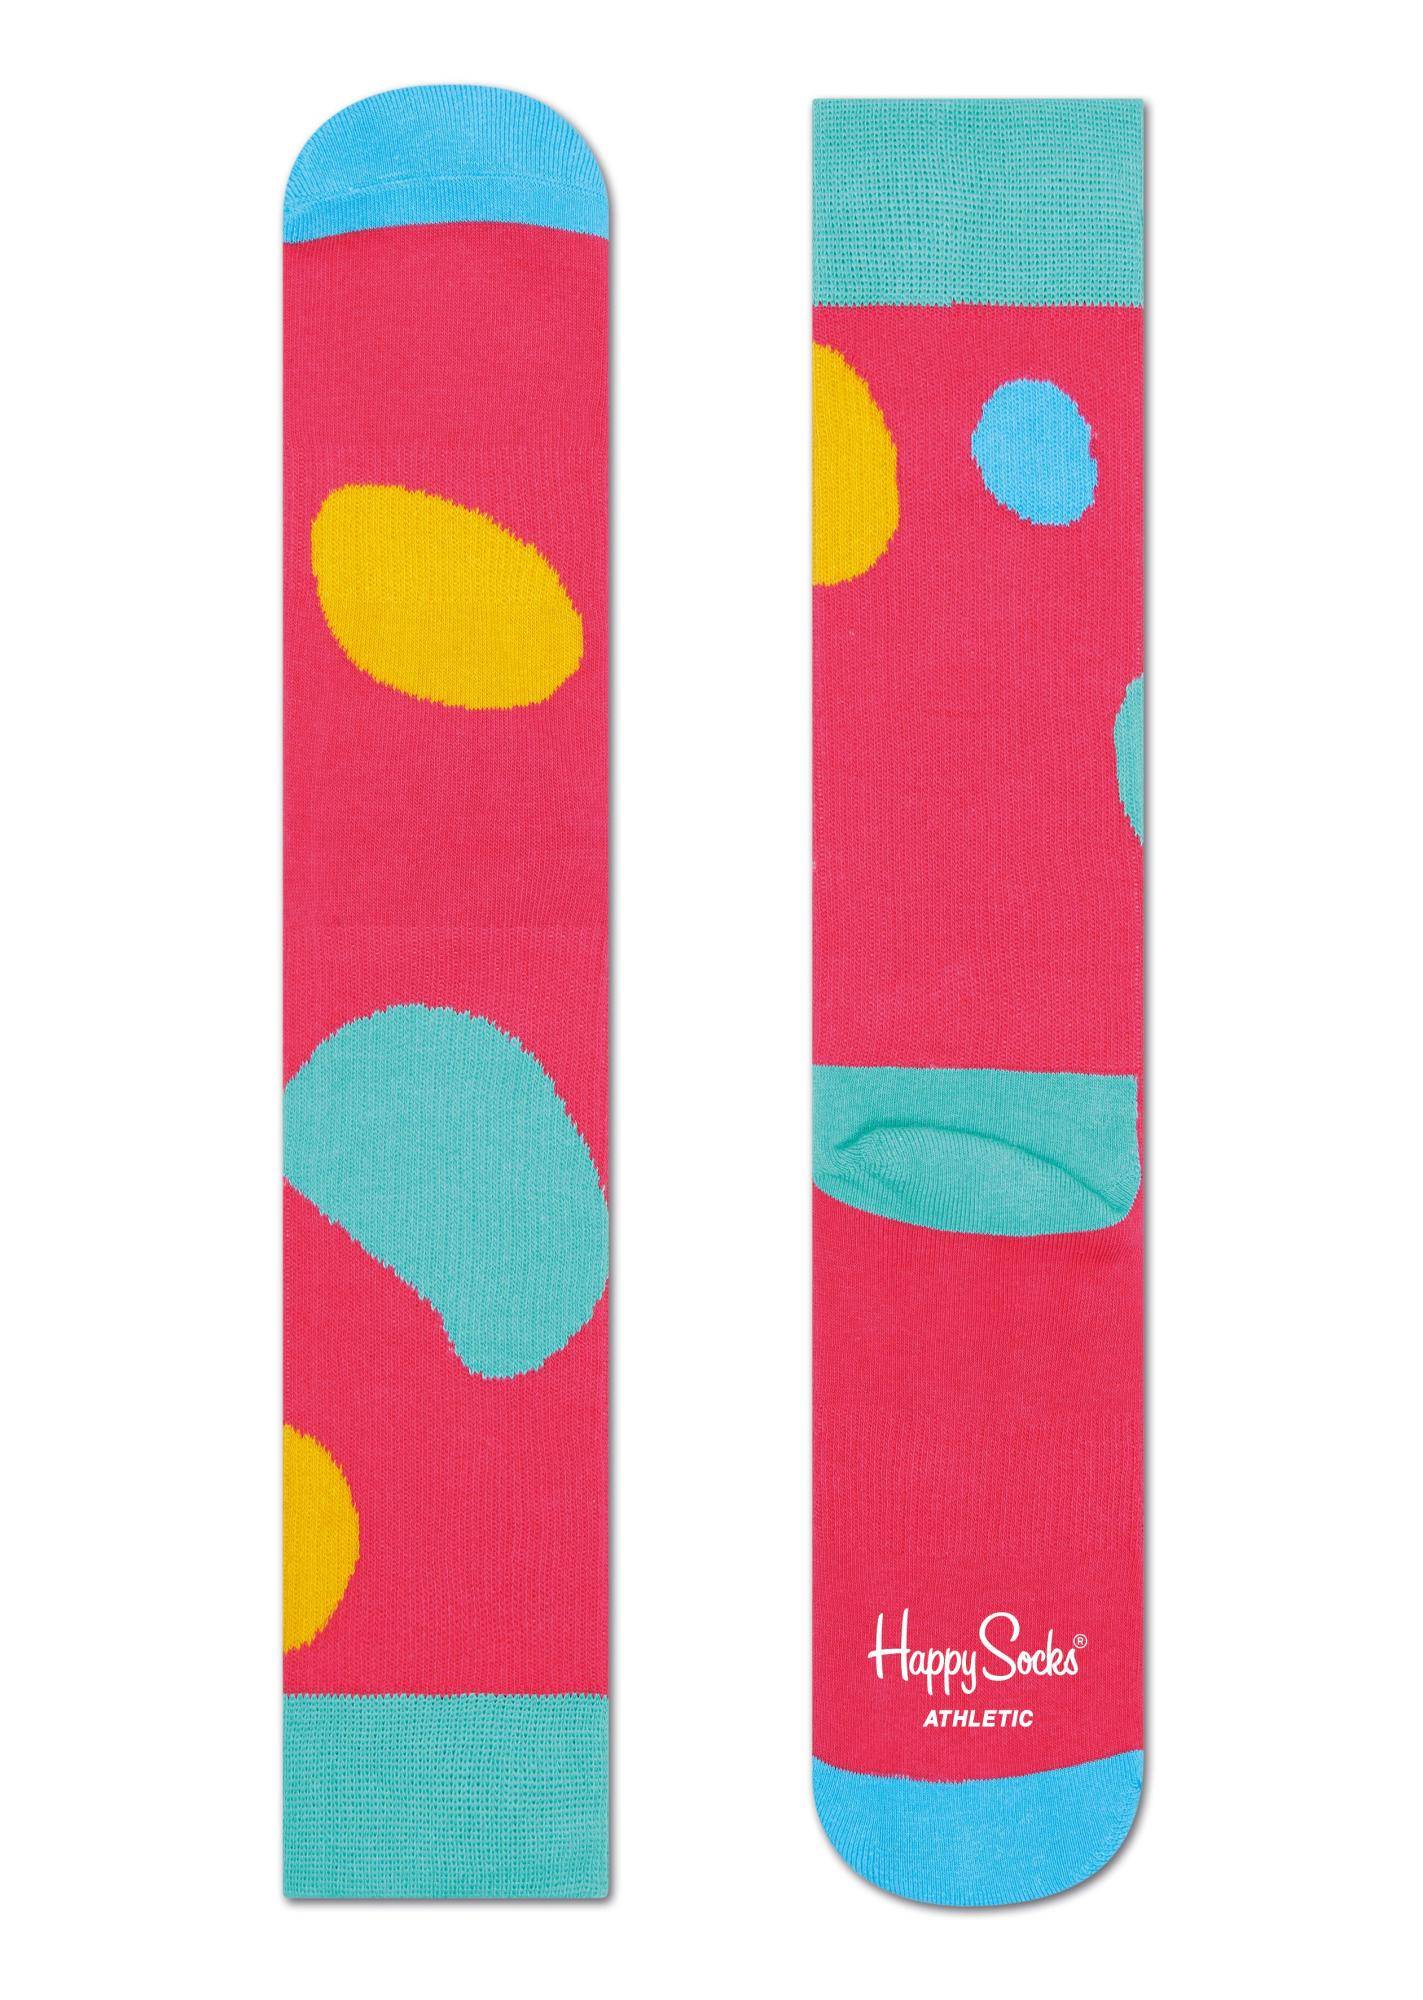 Носки Happy socks ATHLETIC ATTF27 035, размер 29